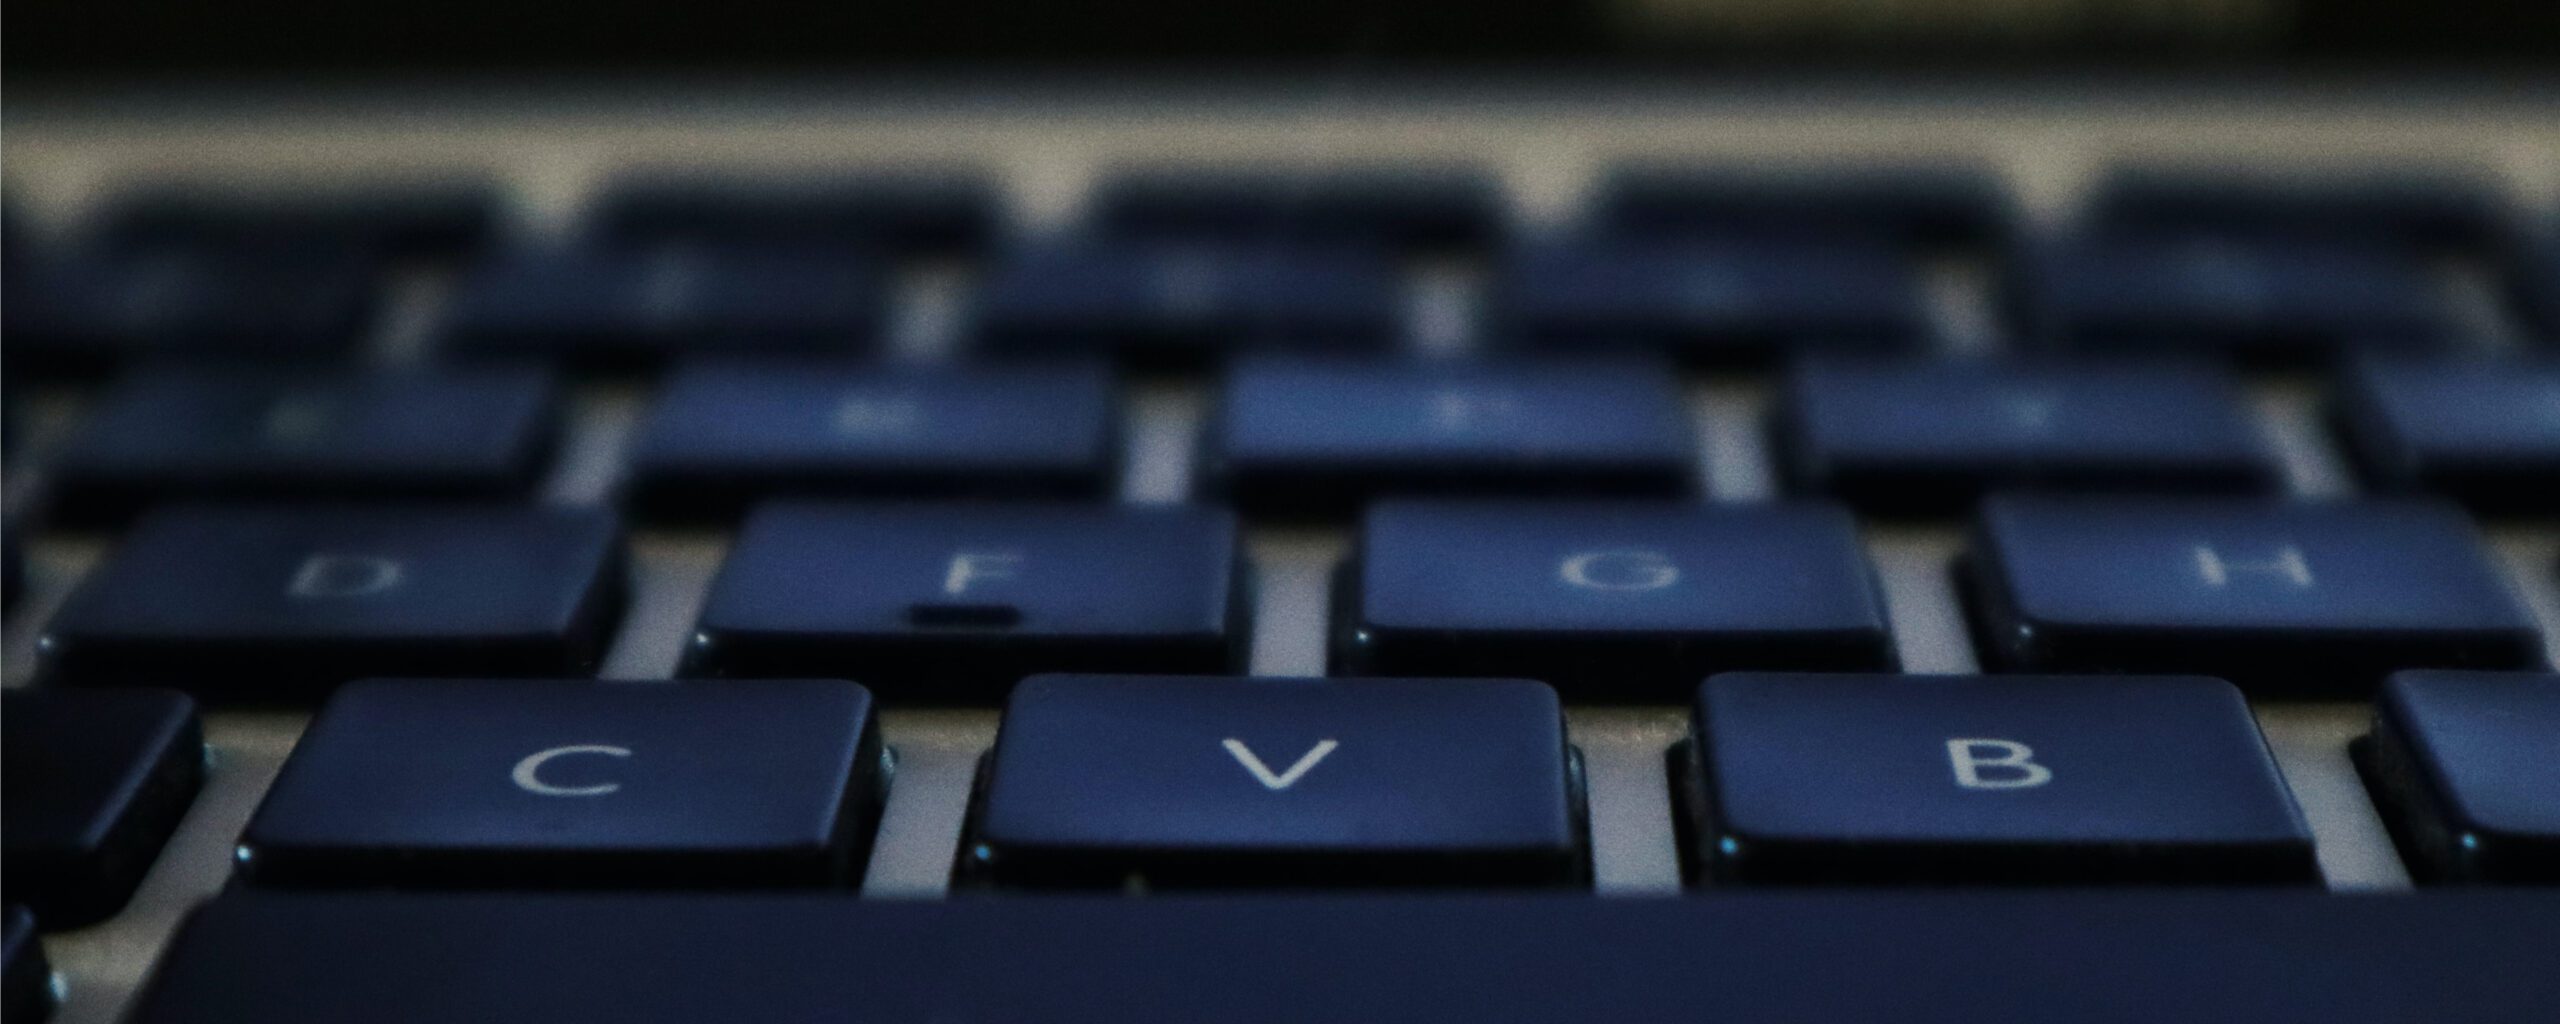 up close of a computer keyboard